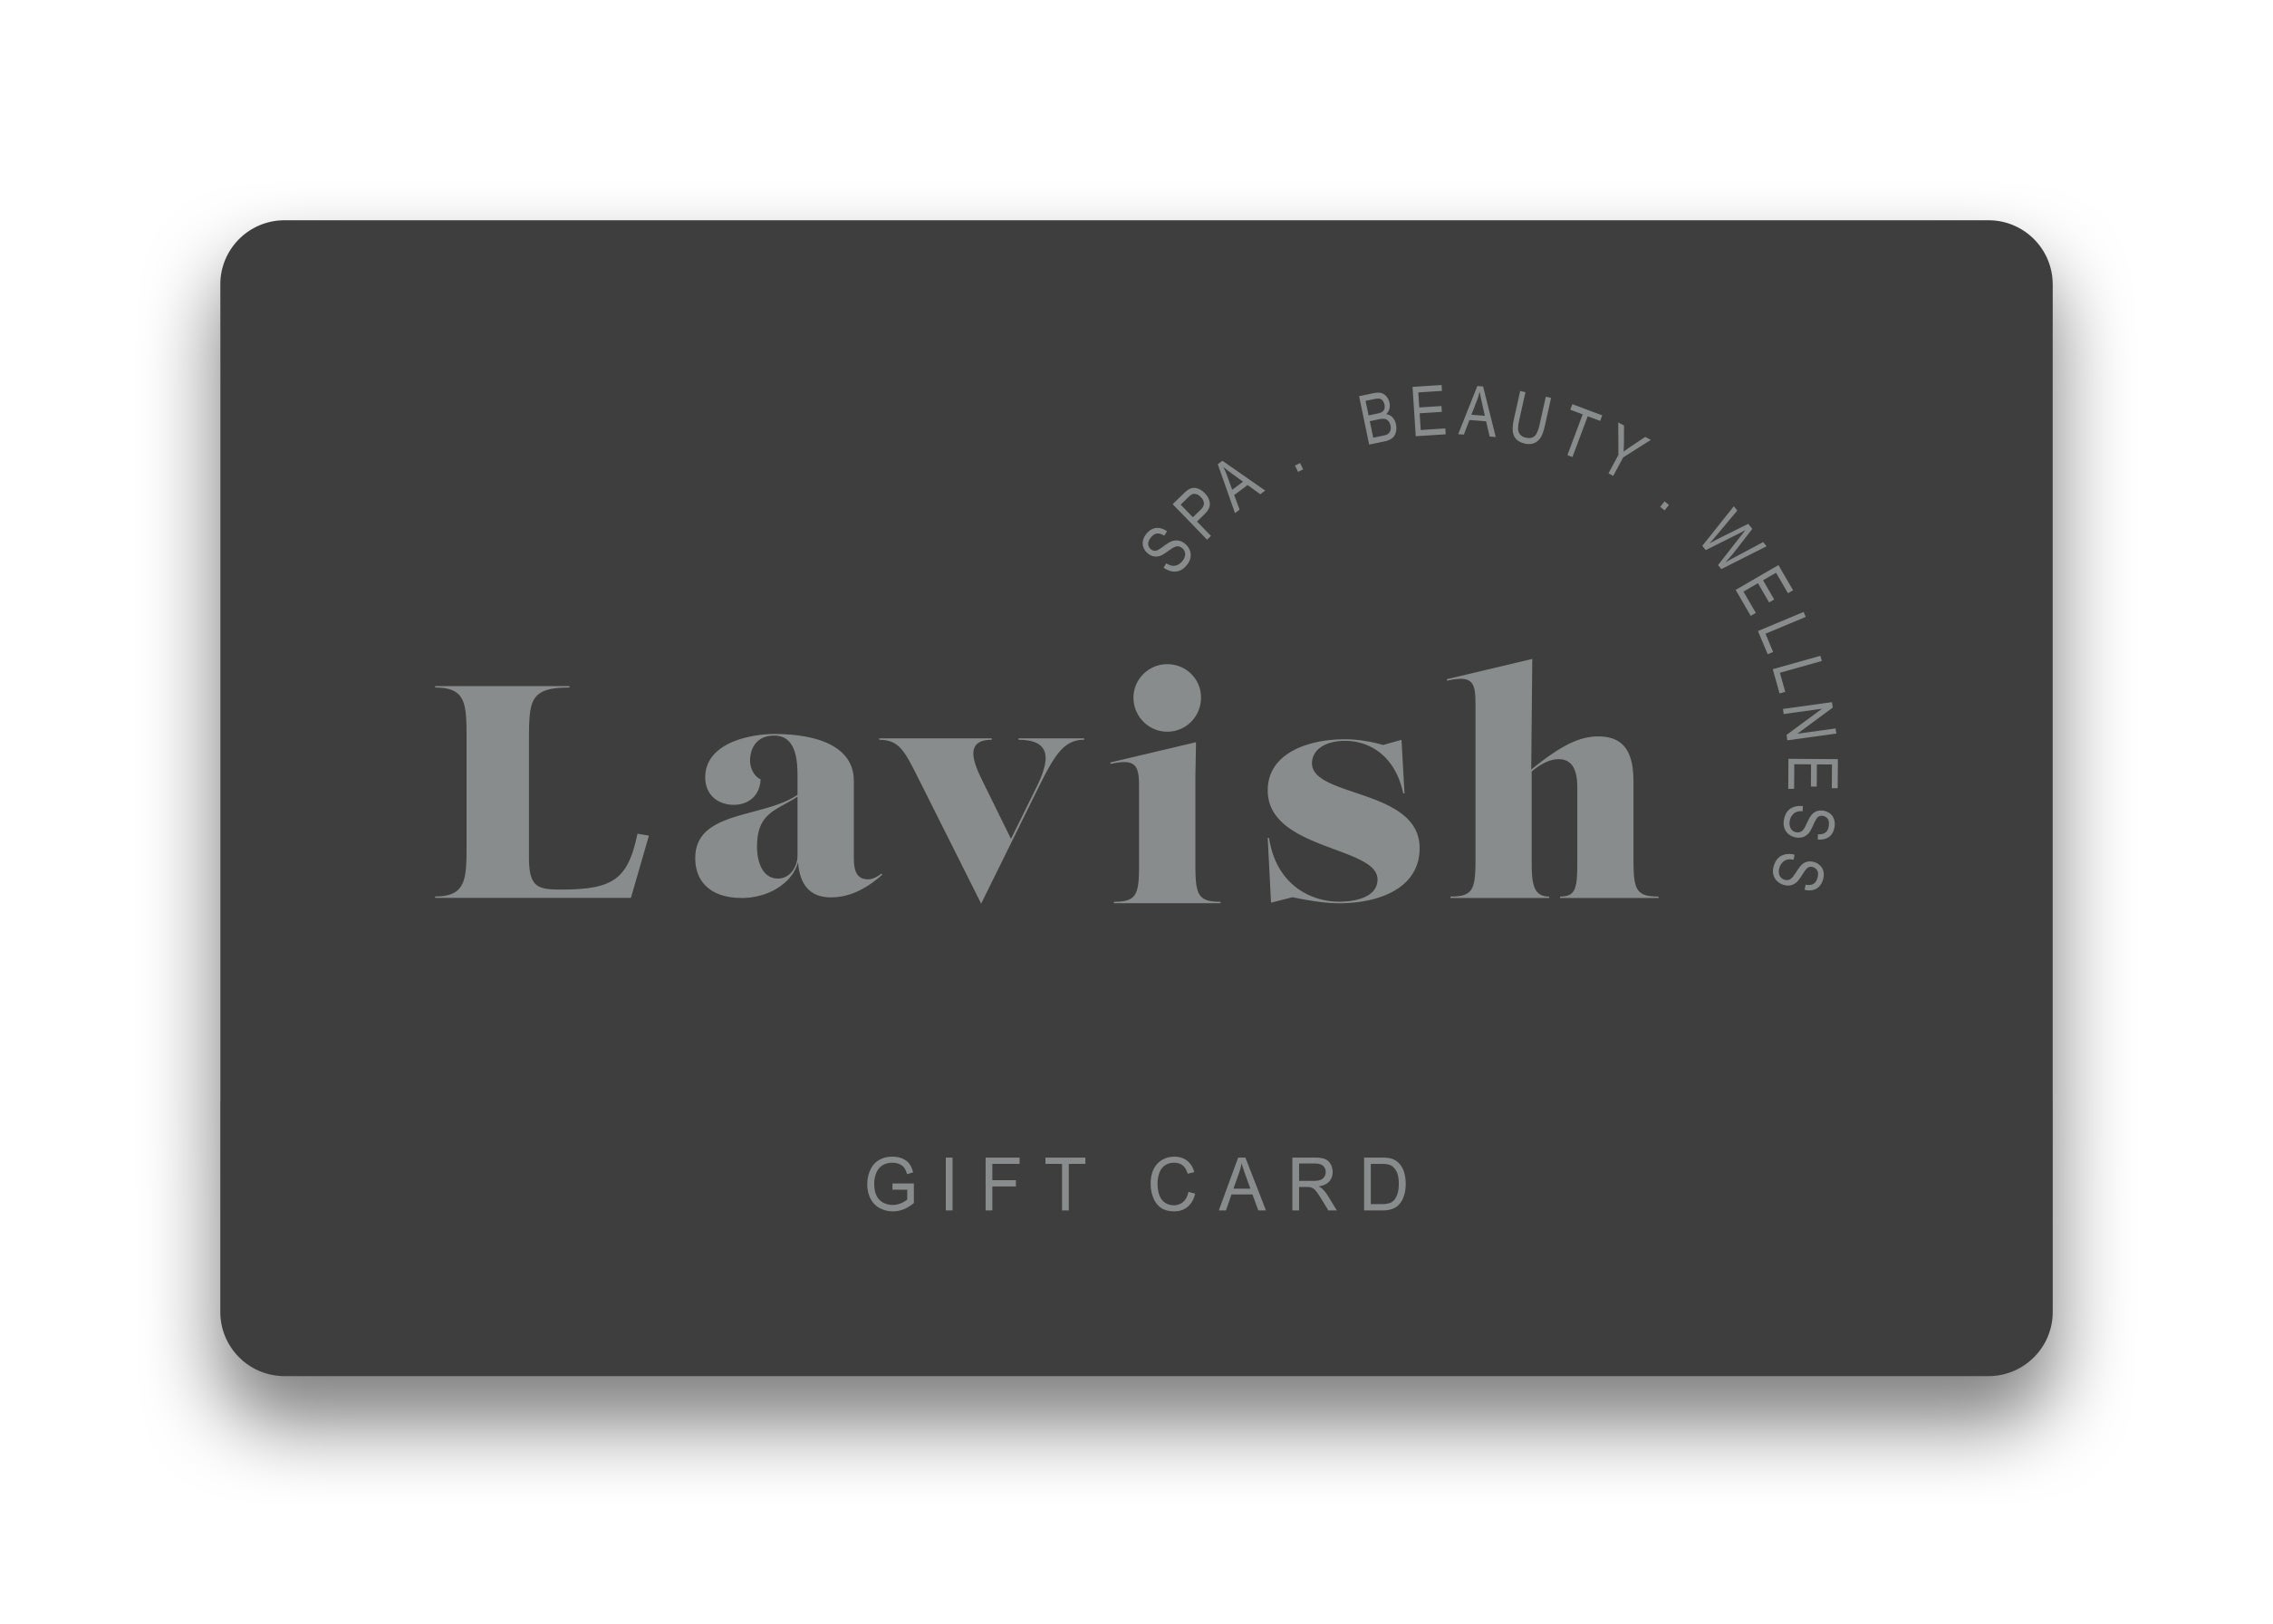 Lavish Spa & Beauty eGift Card gift card image